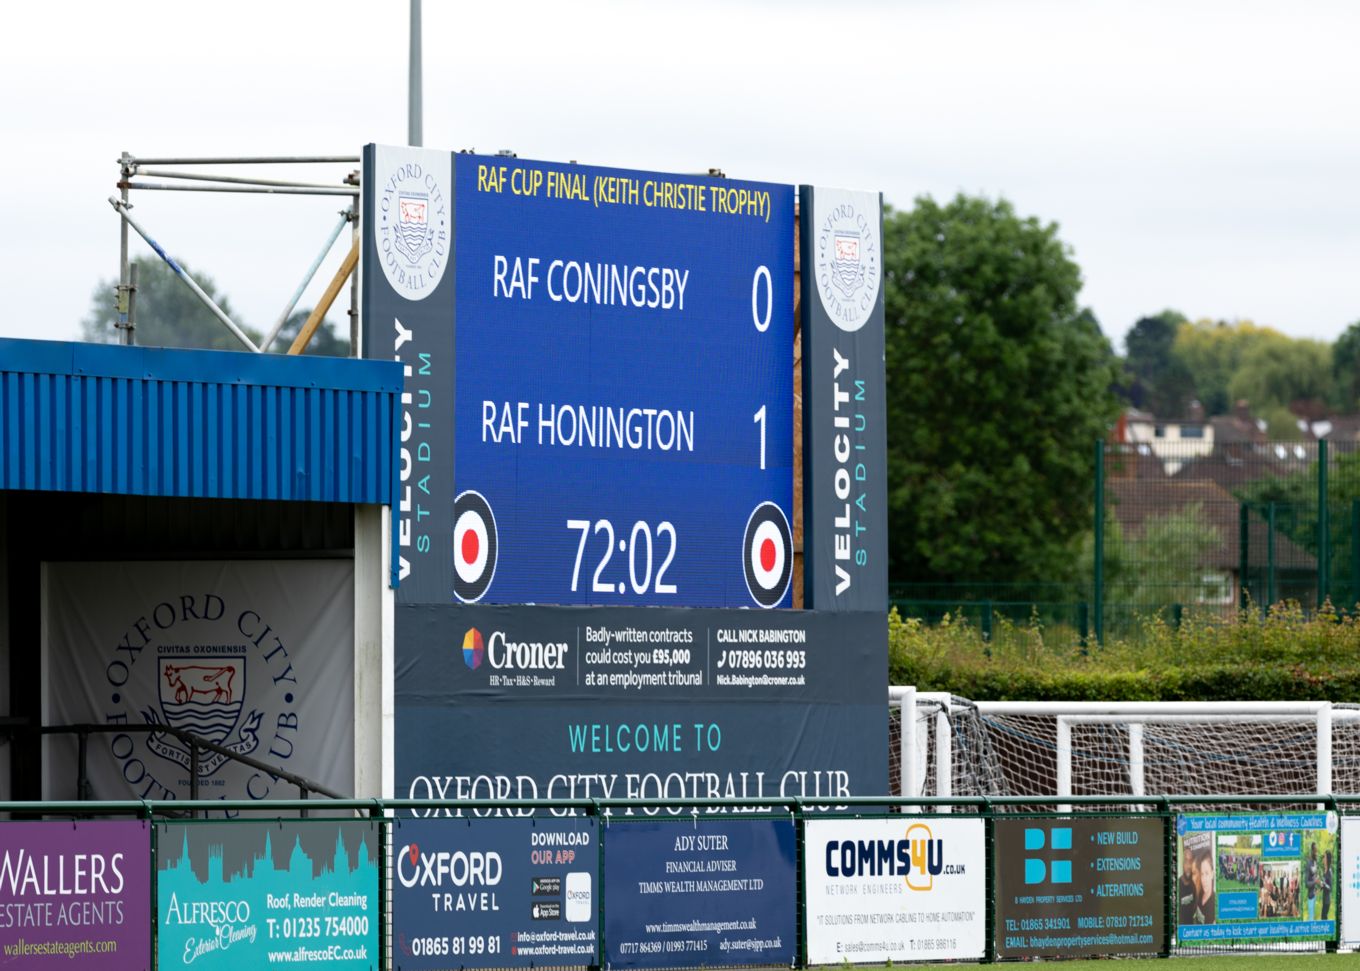 RAF Honington vs RAF Coningsby - The scoreboard at 72 minutes